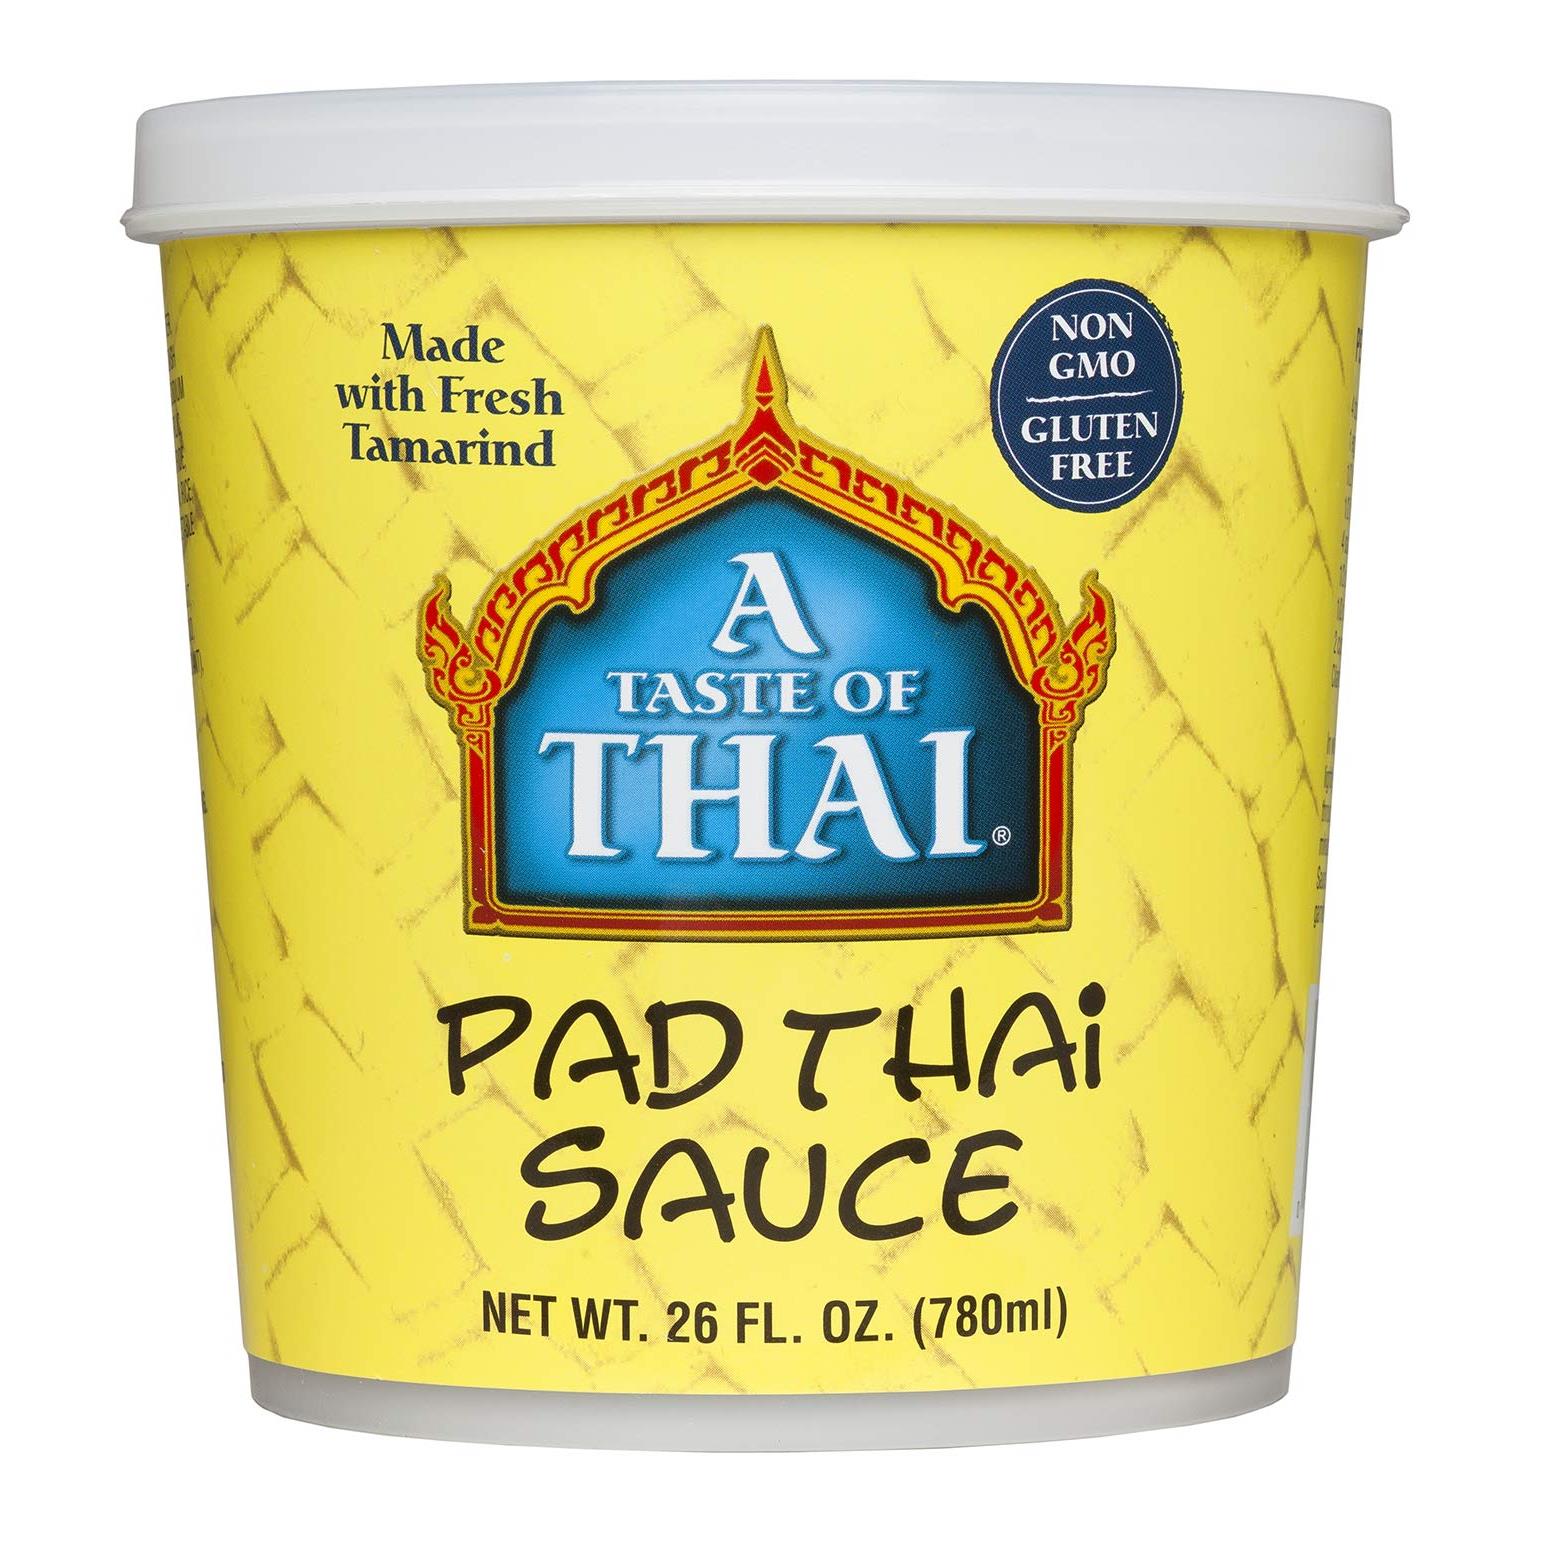 A Taste of Thai Pad Thai Sauce, 26oz - 780ml Tub, Ready-to-Use Mix, Made with Fresh Tamarind, Non-GMO, Gluten-free